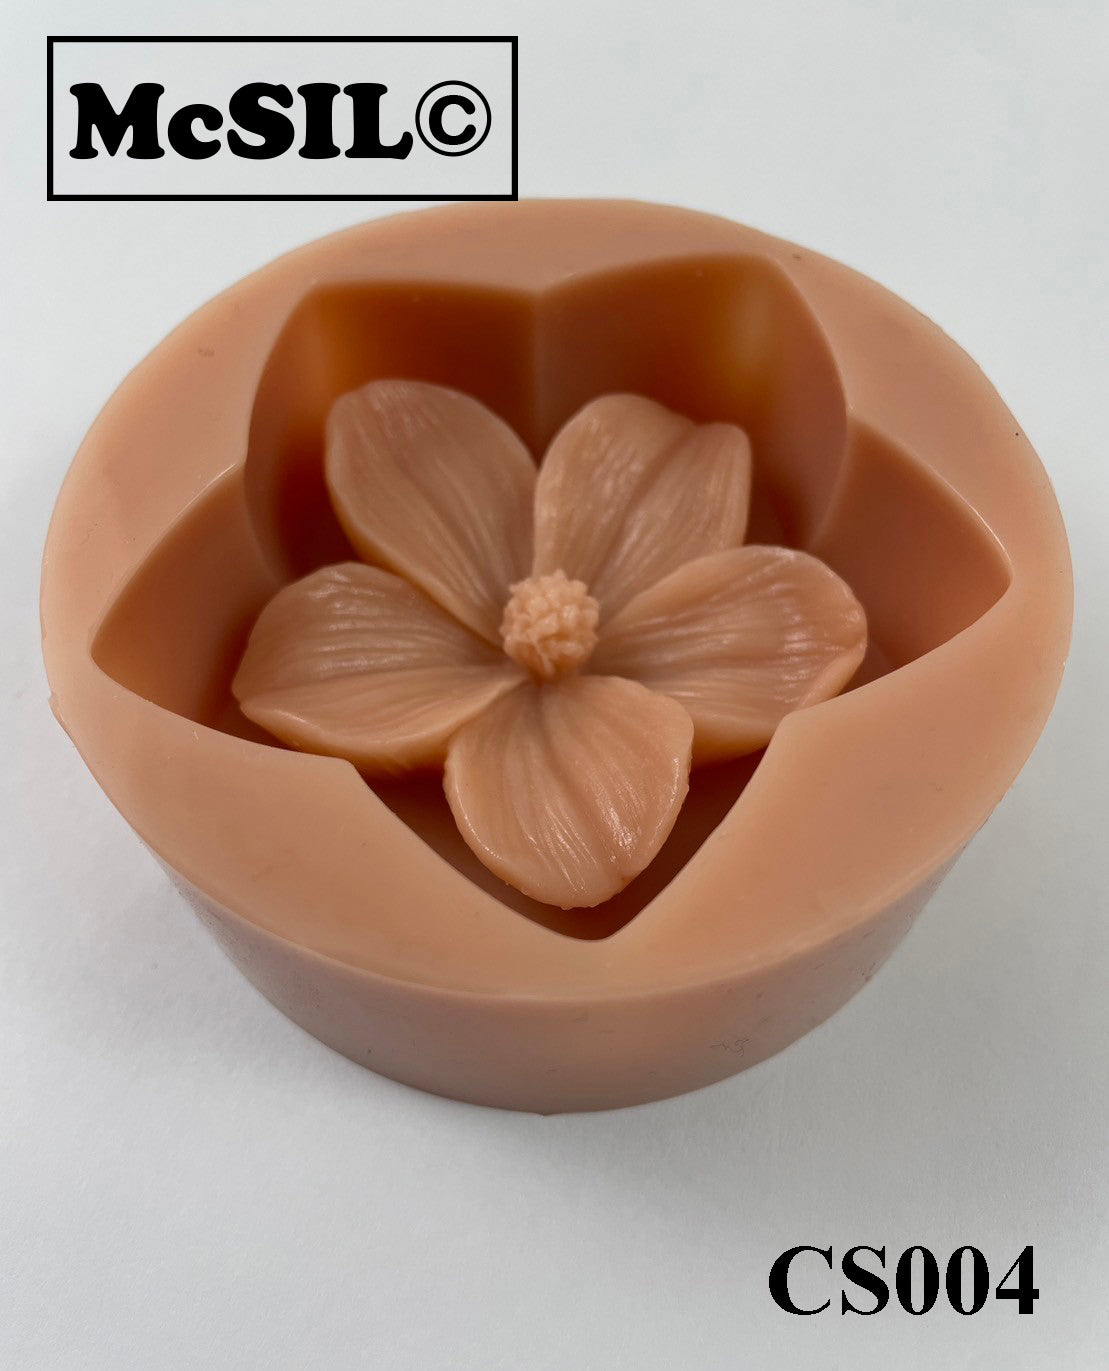 Silicone Mold - CS004 - Cherry blossoms